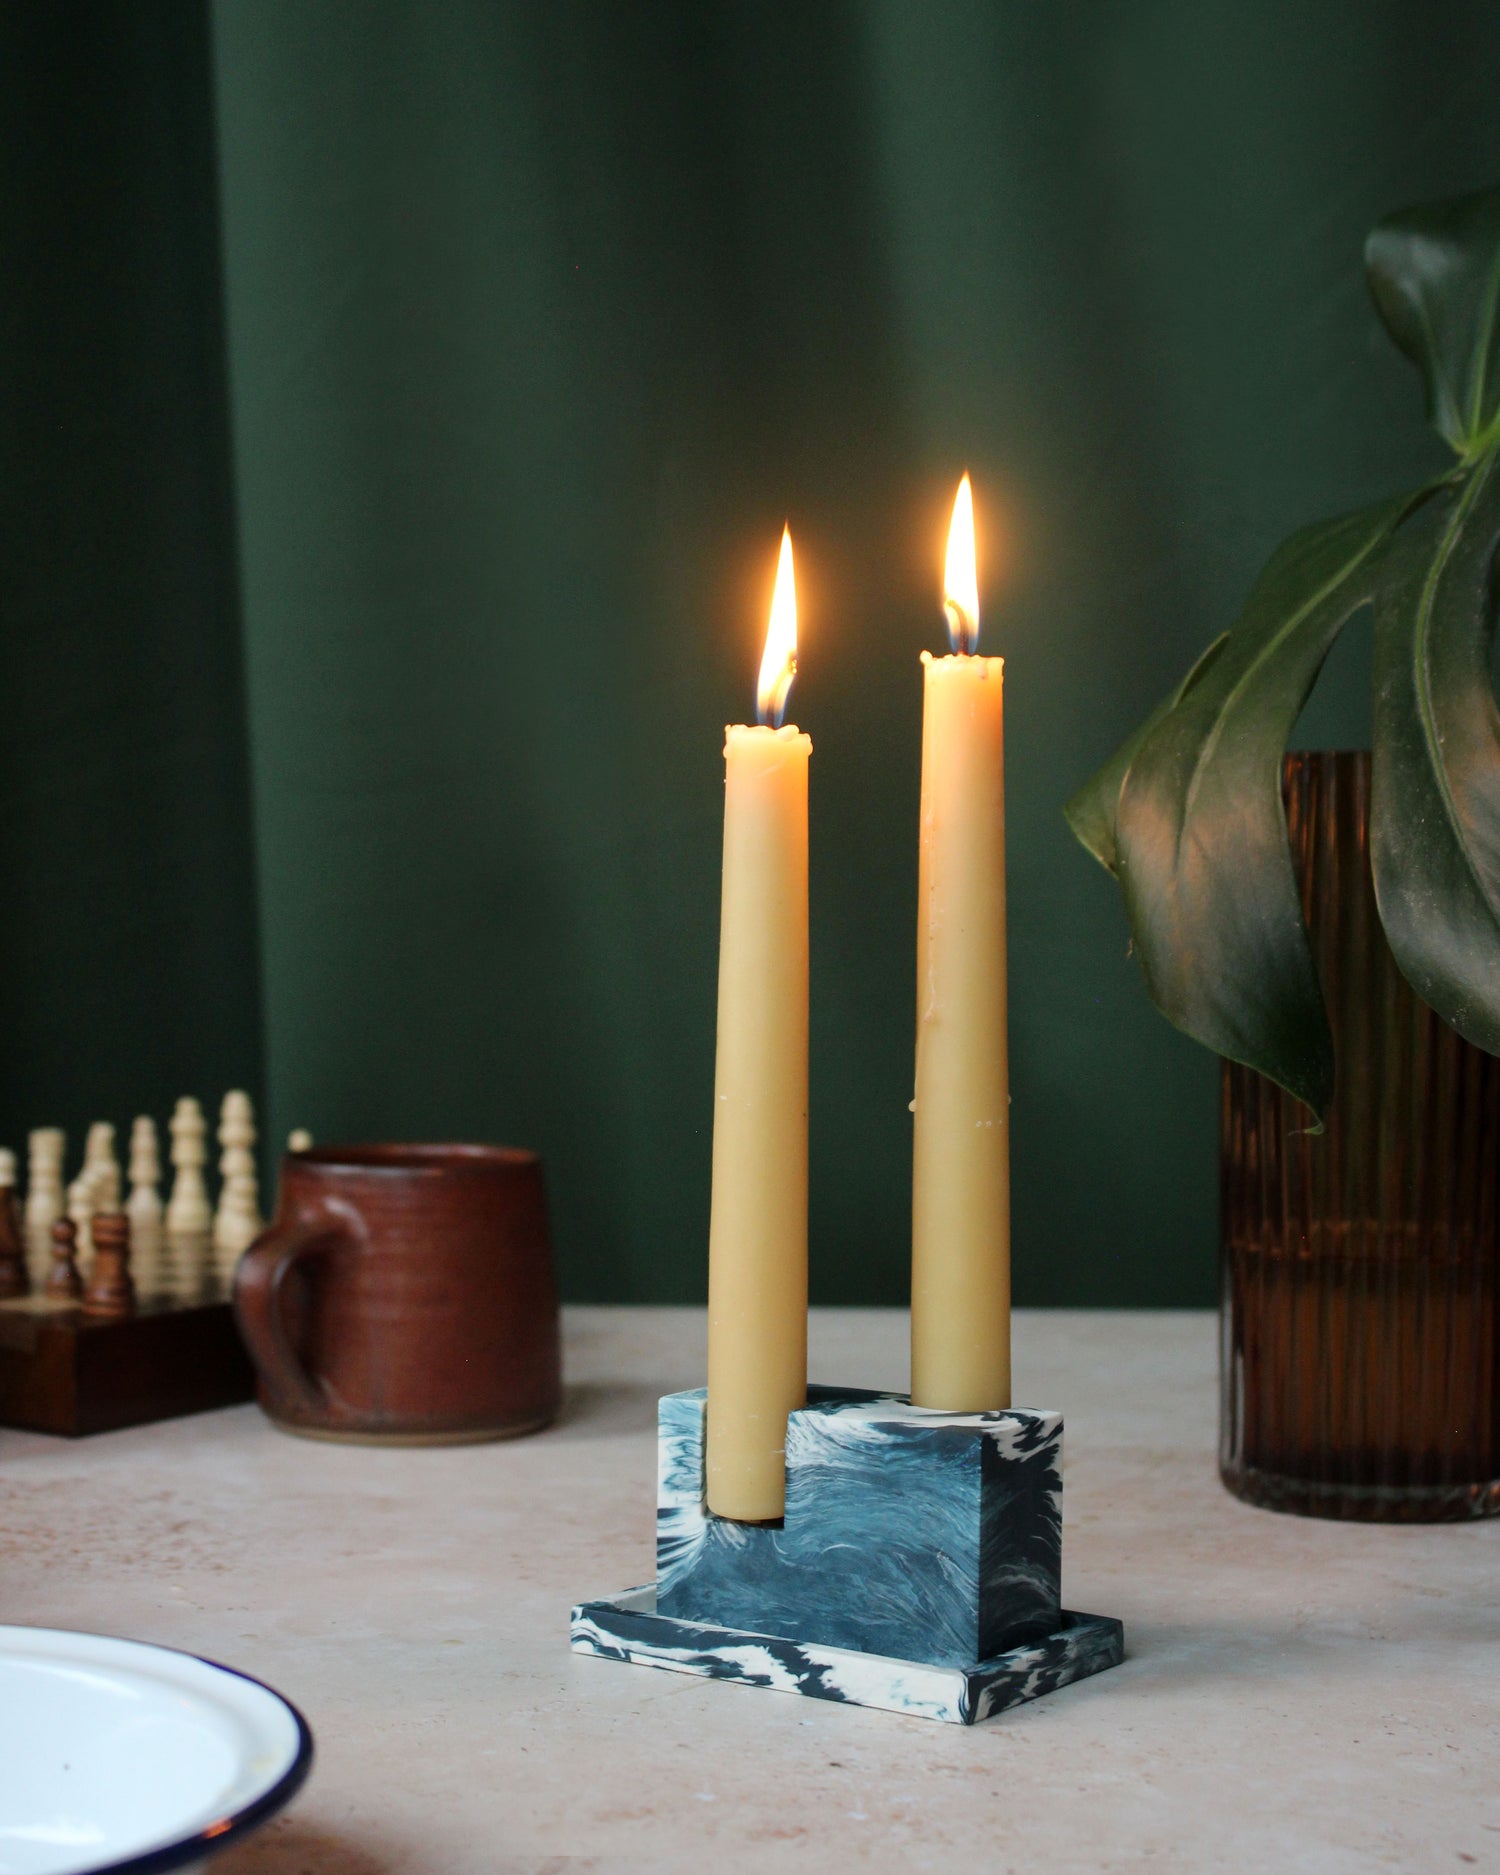 Jesmonite Marble Jar and Candle Making Experience - Klook United